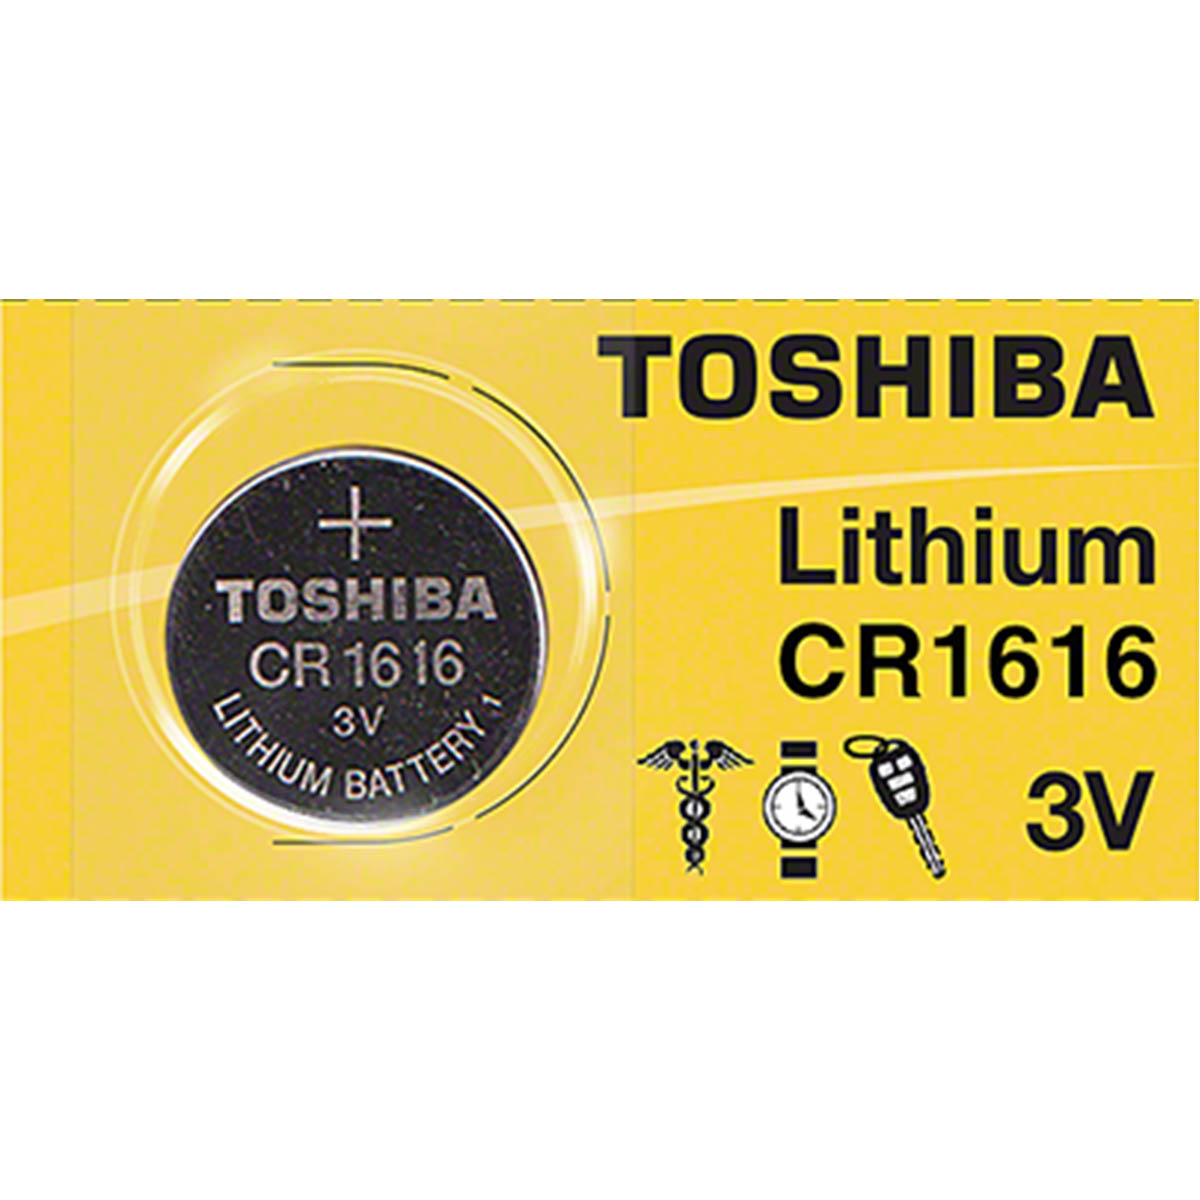 Toshiba CR1616 Lithium Coin Cell Battery 3v, Tear Strip